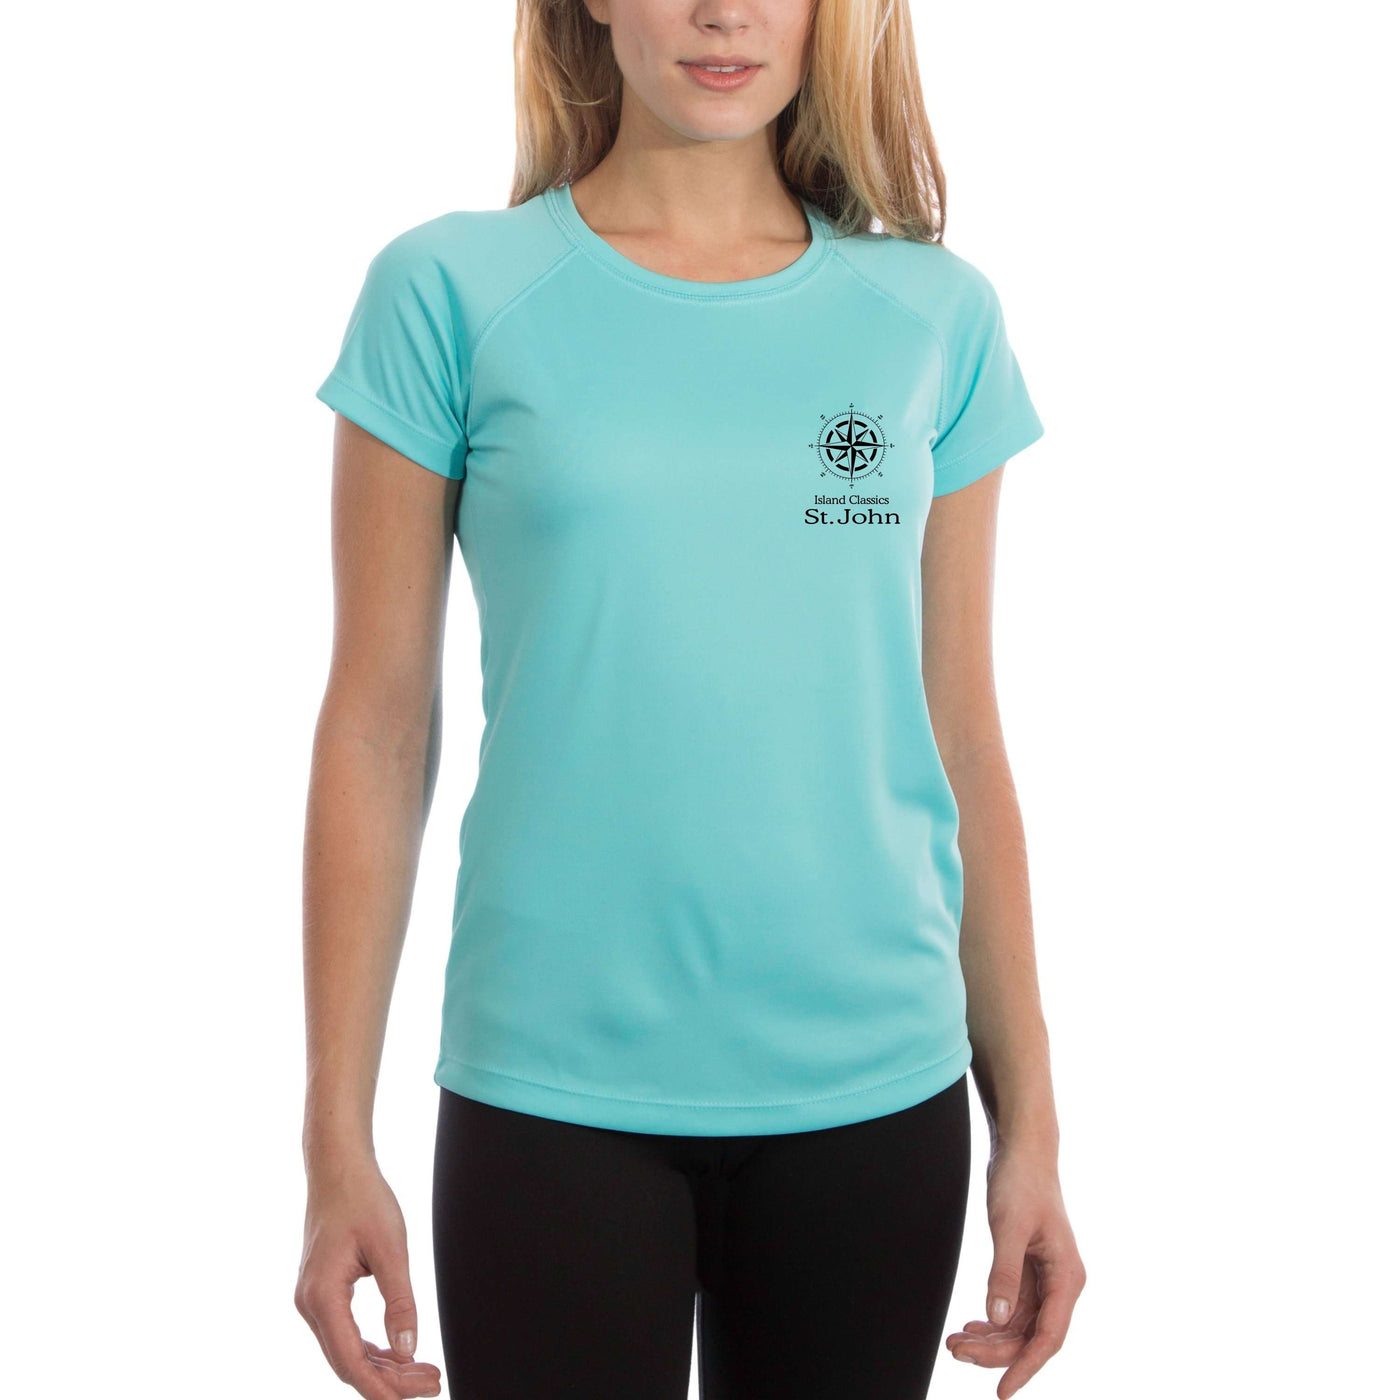 Island Classics St. John Women's UPF 50+ UV Sun Protection Classic Fit Short Sleeve T-shirt